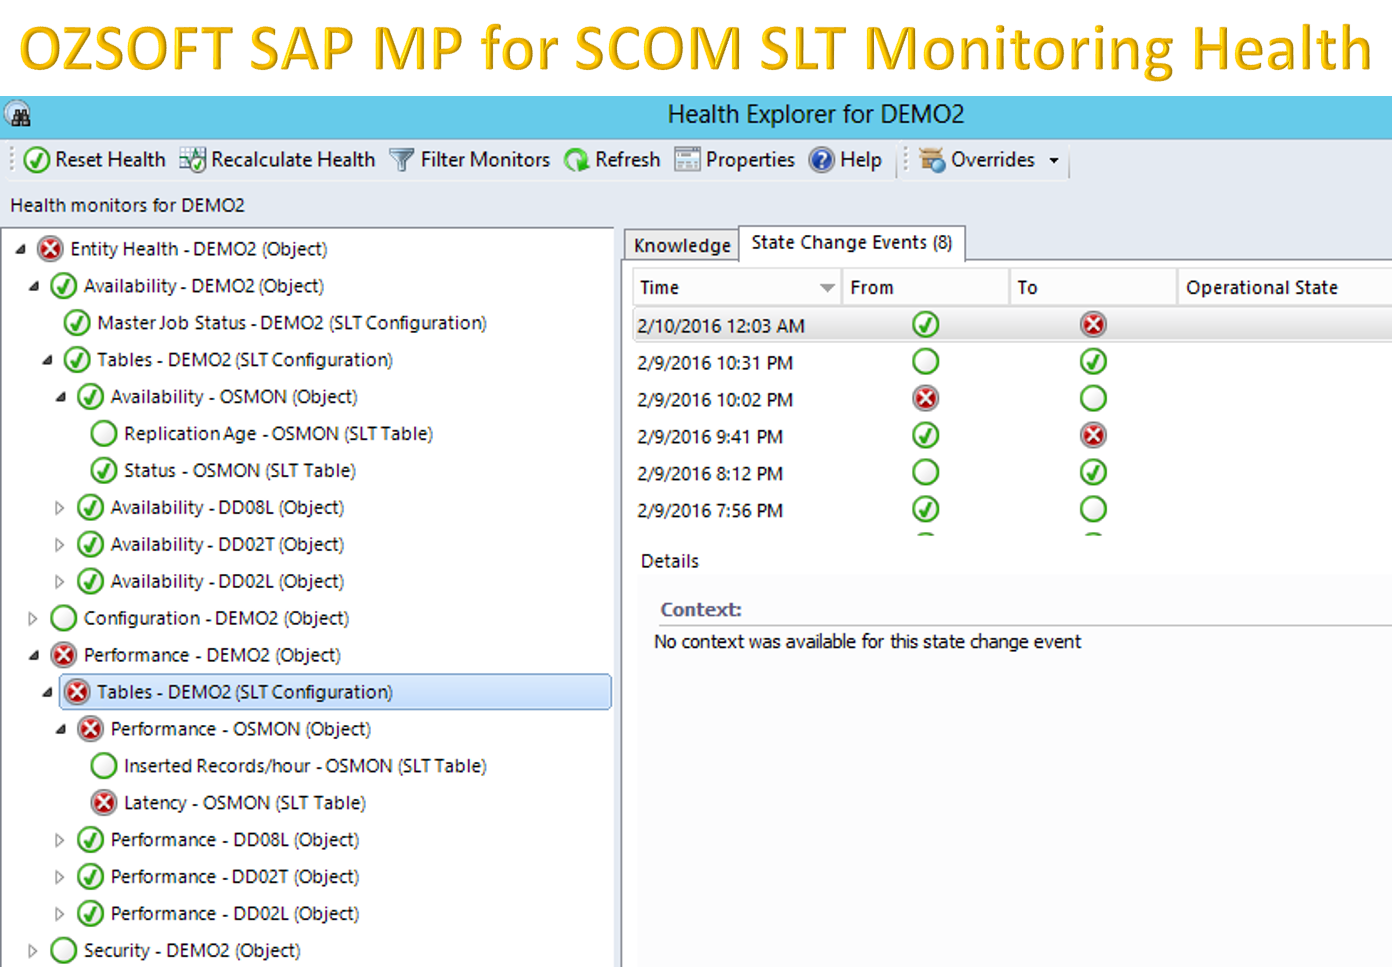 OZSOFT SAPMP for SCOM SLT Monitoring Health